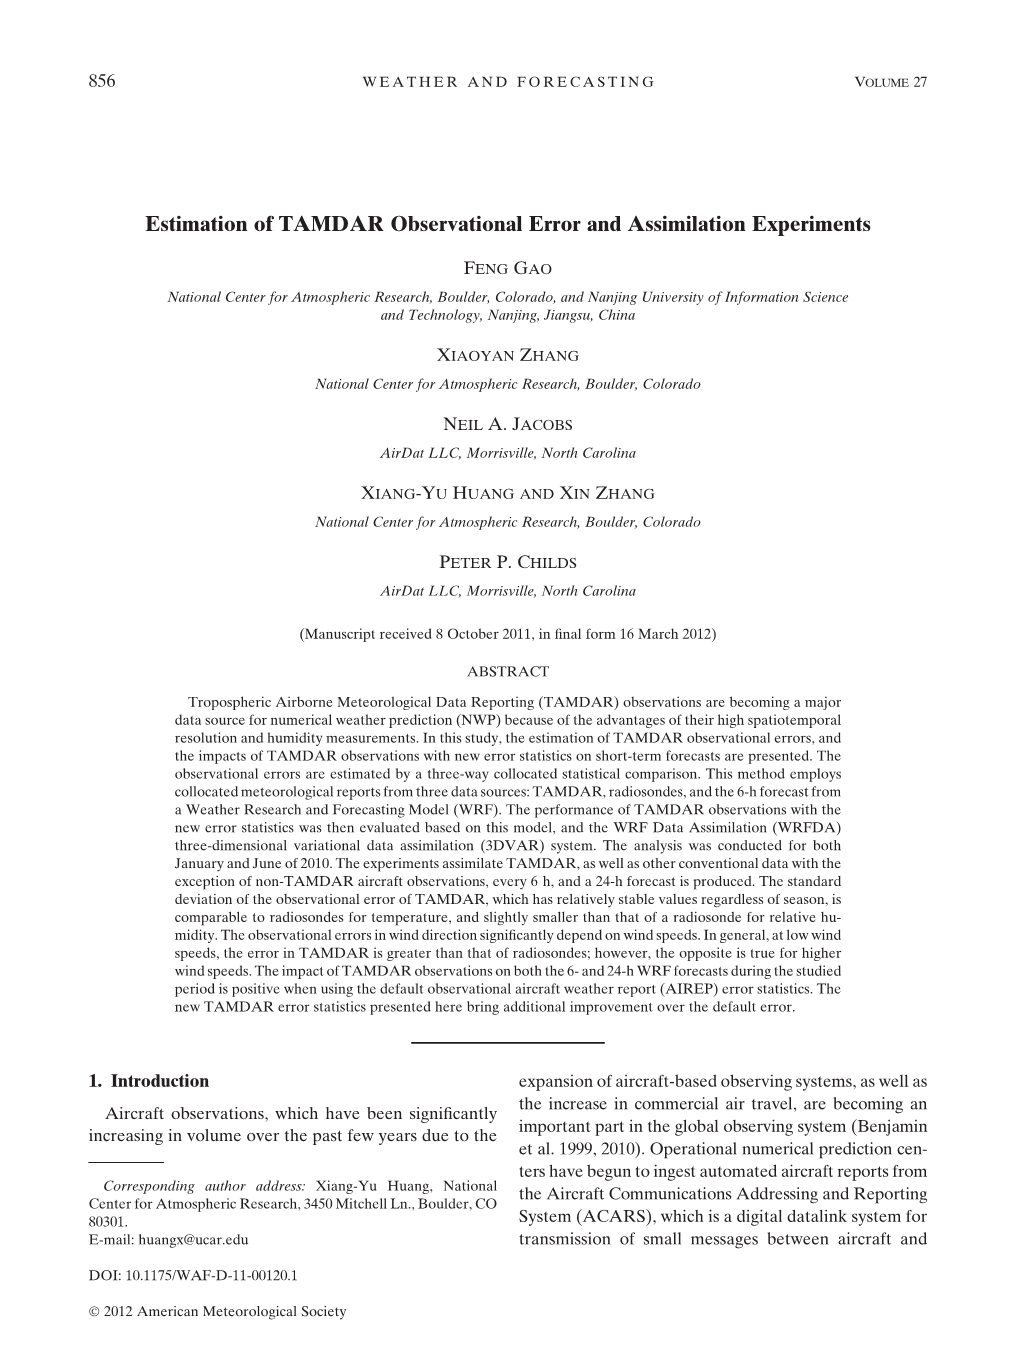 Estimation of TAMDAR Observational Error and Assimilation Experiments